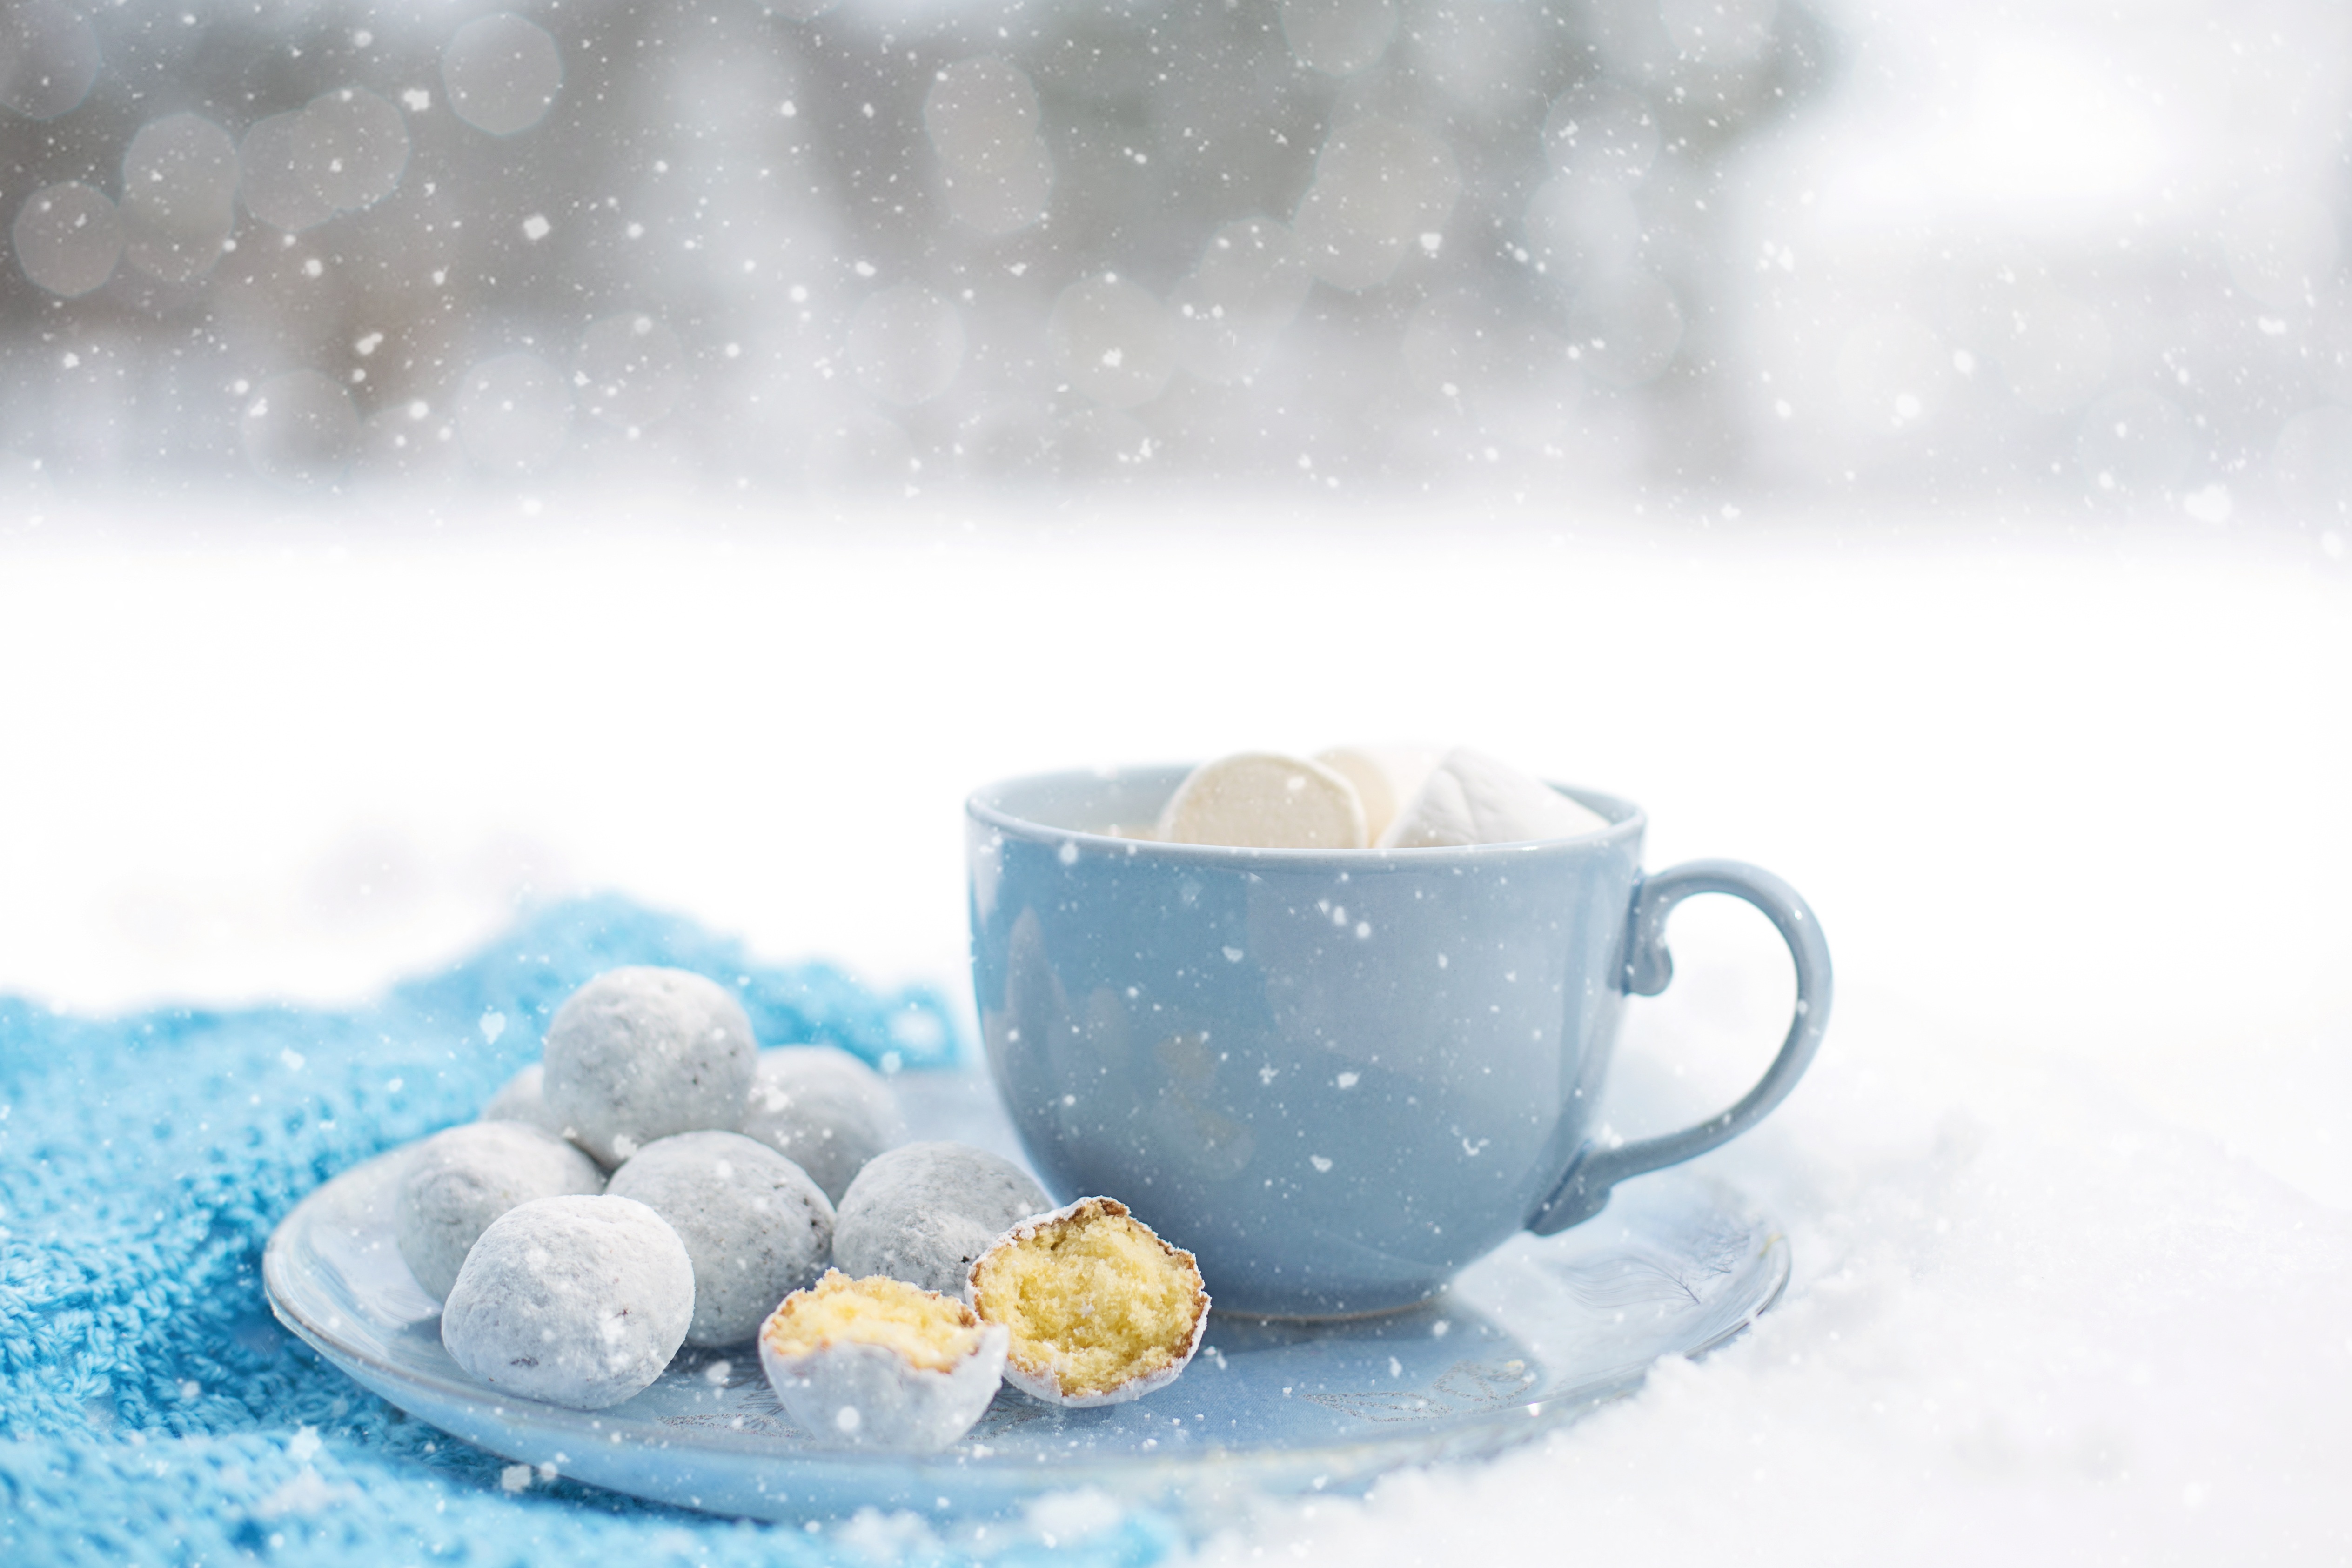 Hot chocolate in winter photo